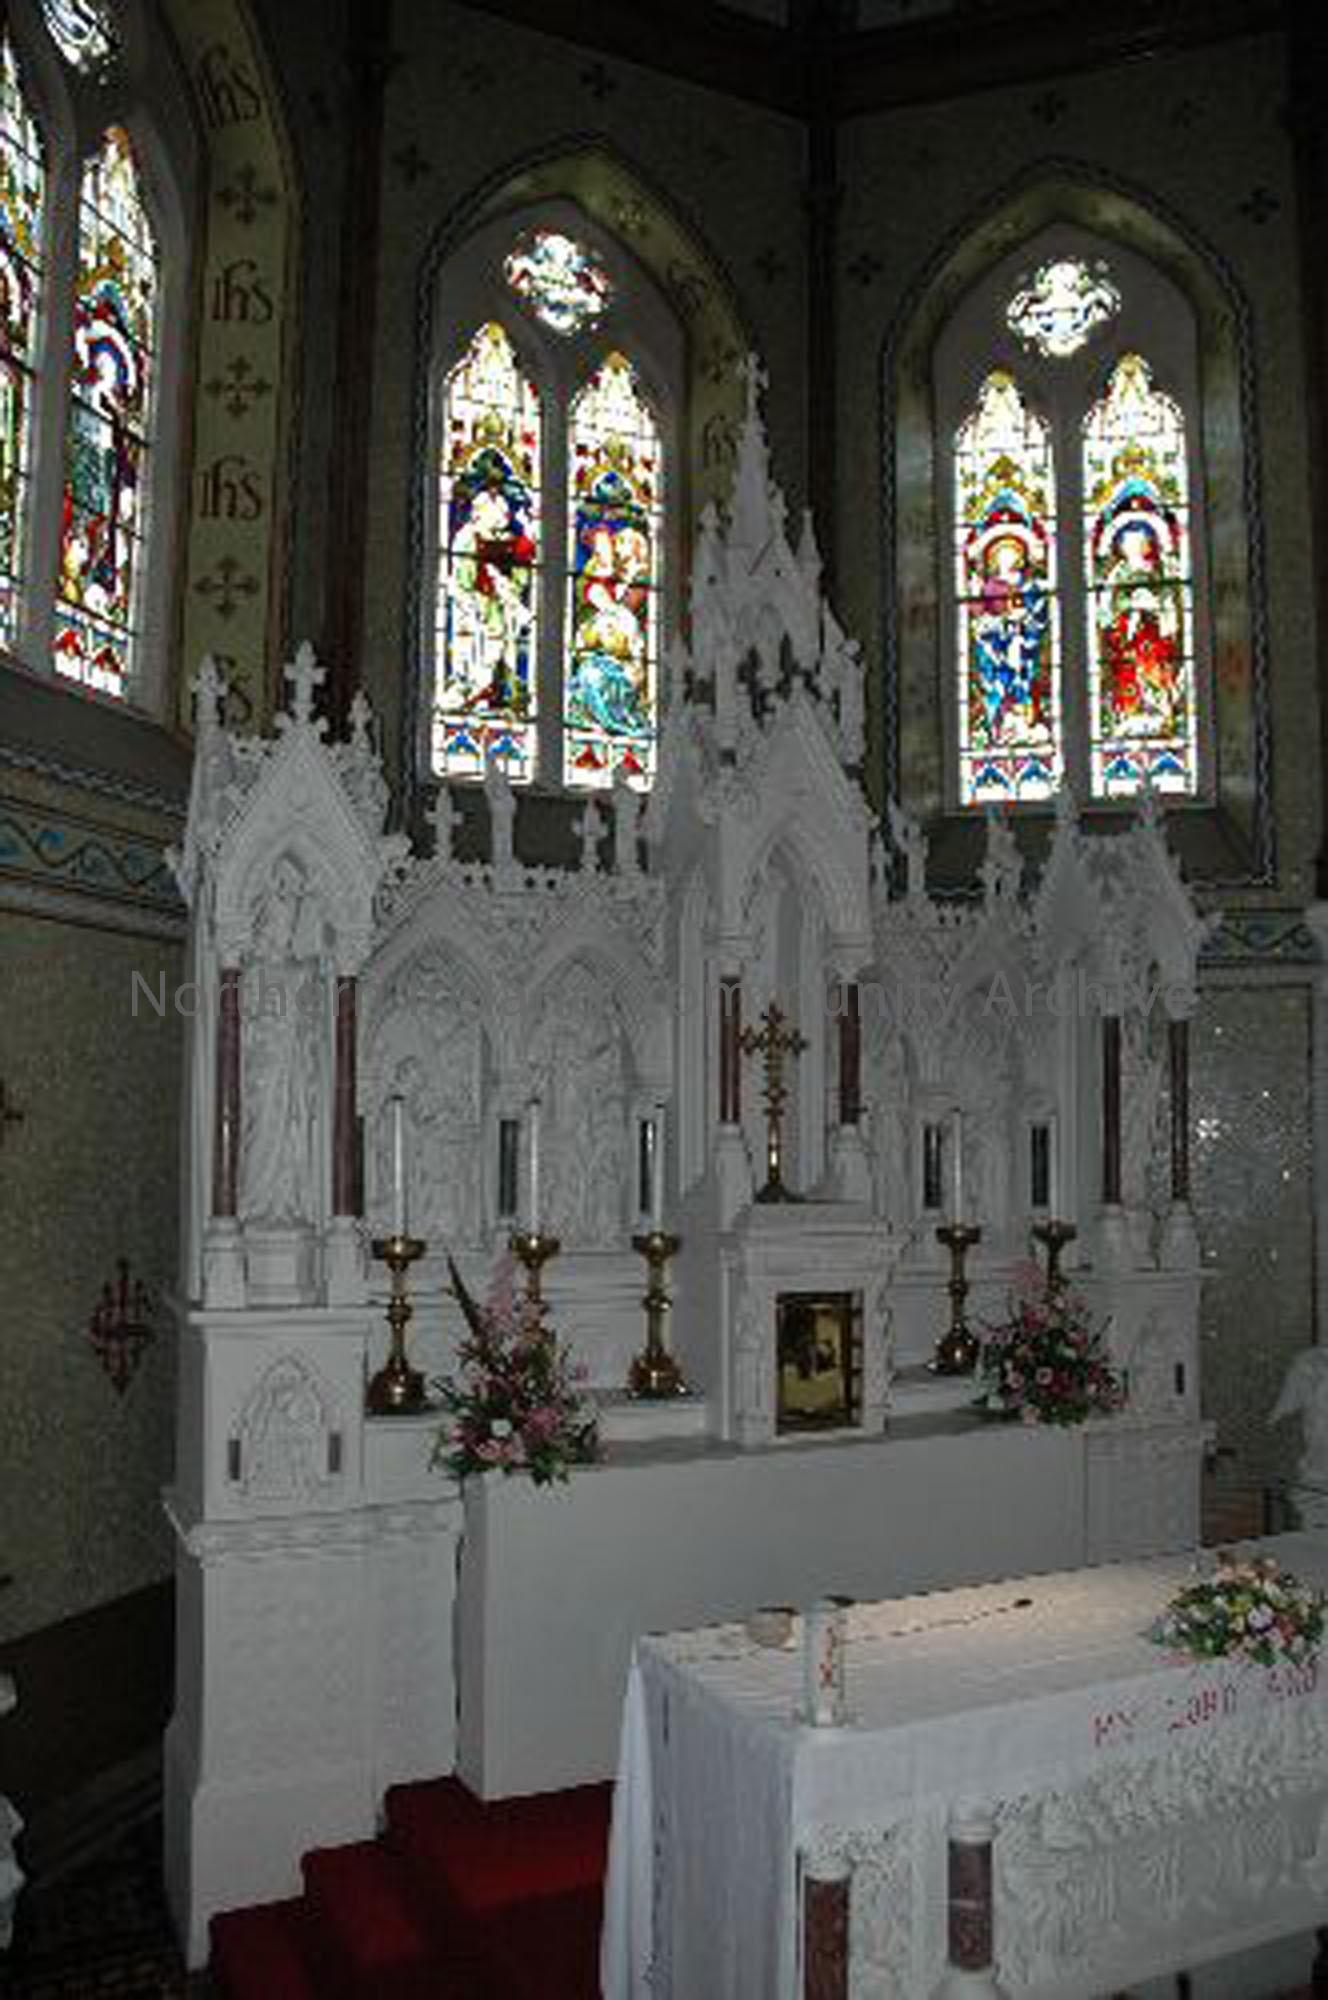 Our Lady & St Patricks altar